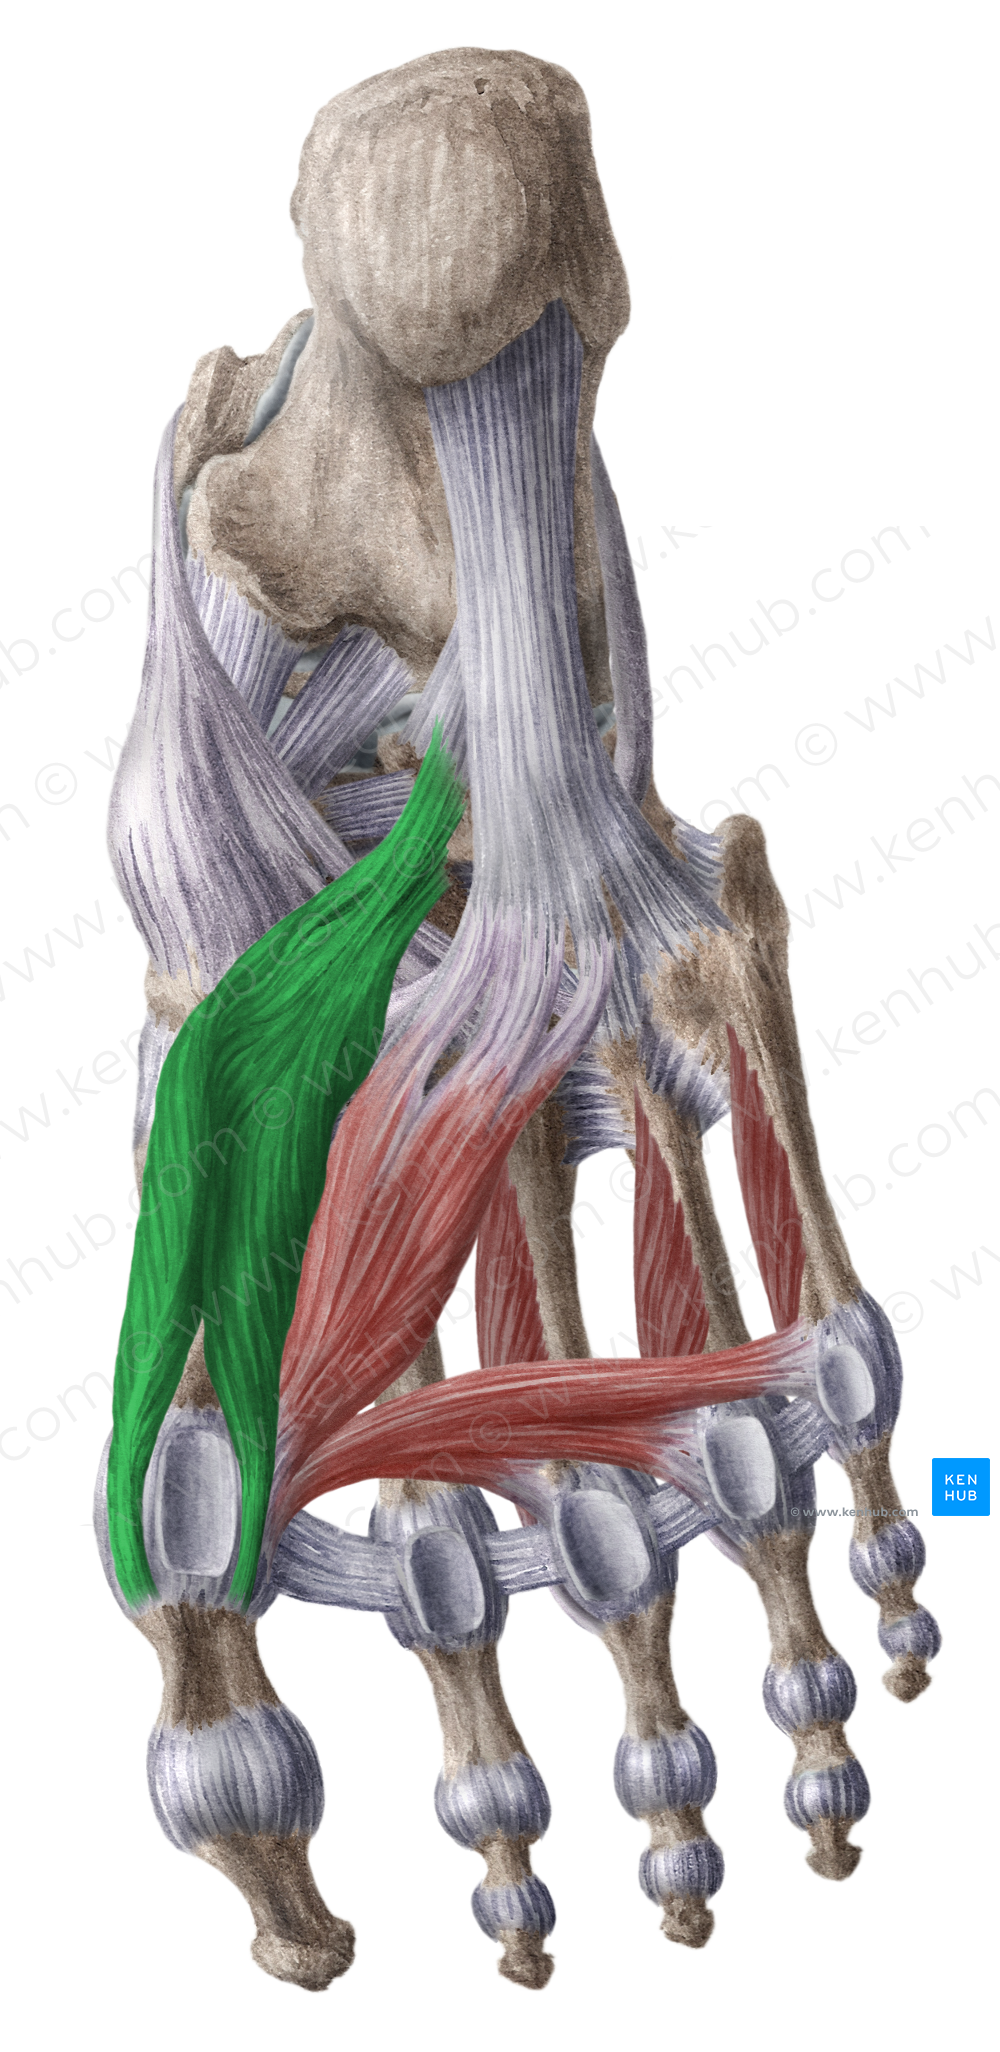 Flexor hallucis brevis muscle (#5378)